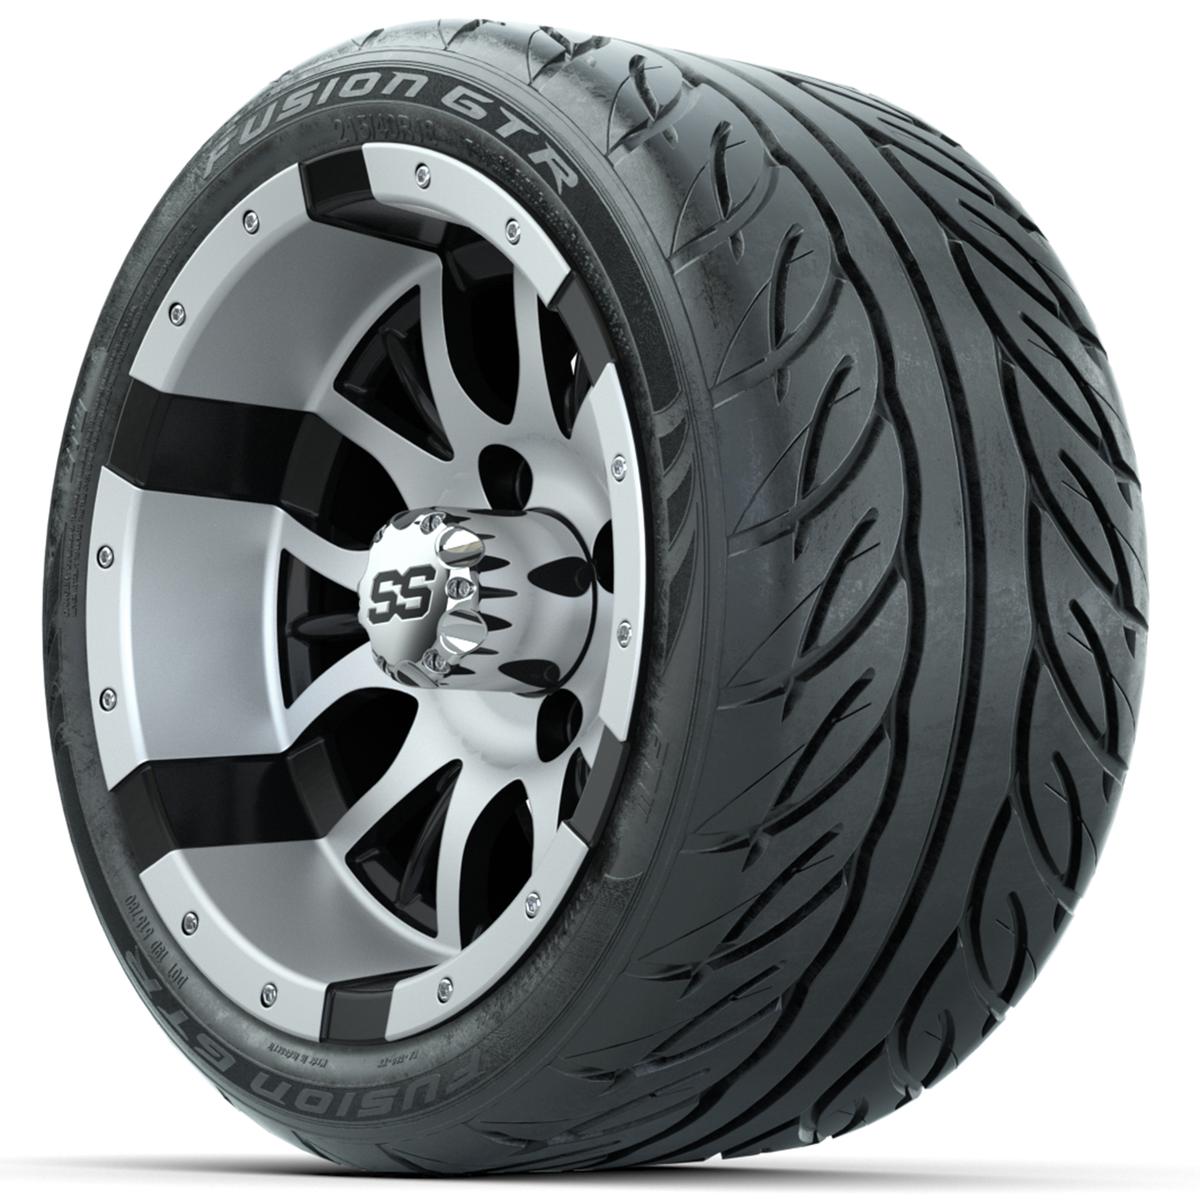 Set of (4) 12 in GTW Diesel Wheels with 215/40-R12 Fusion GTR Street Tires